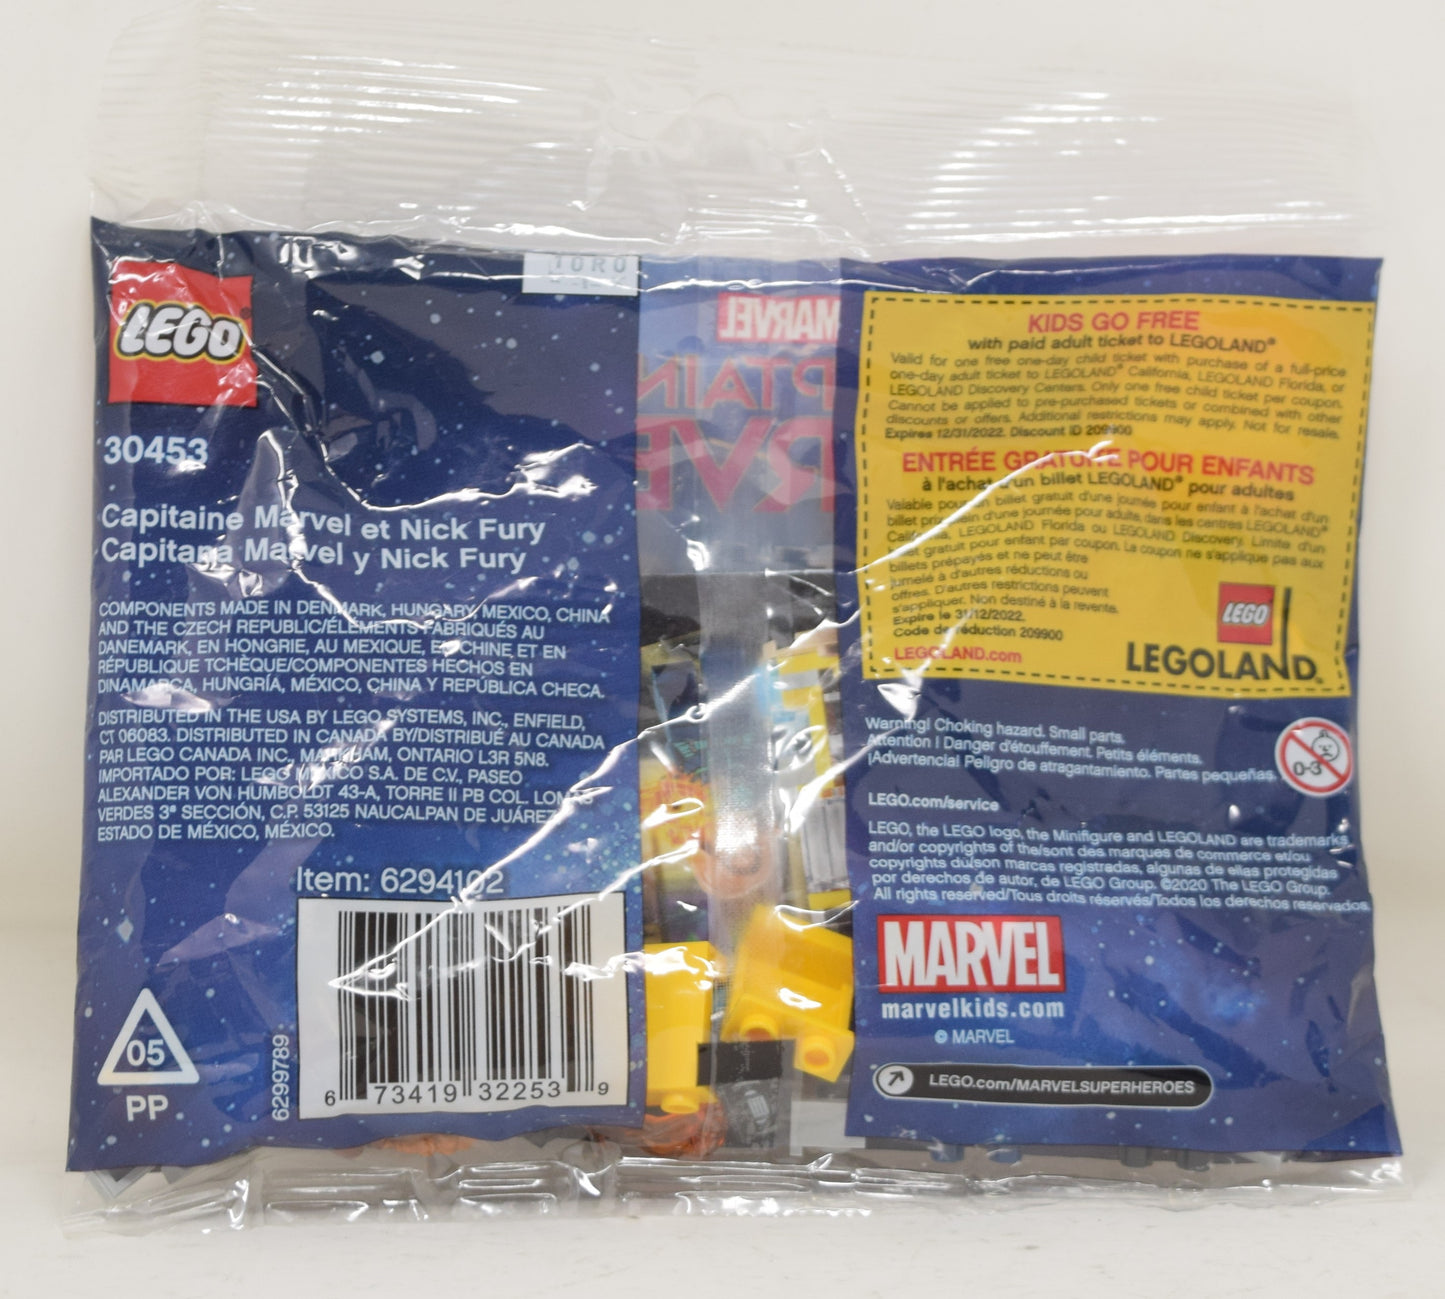 Lego Captain Marvel Nick Fury Avengers Minifigure Set 30453 New